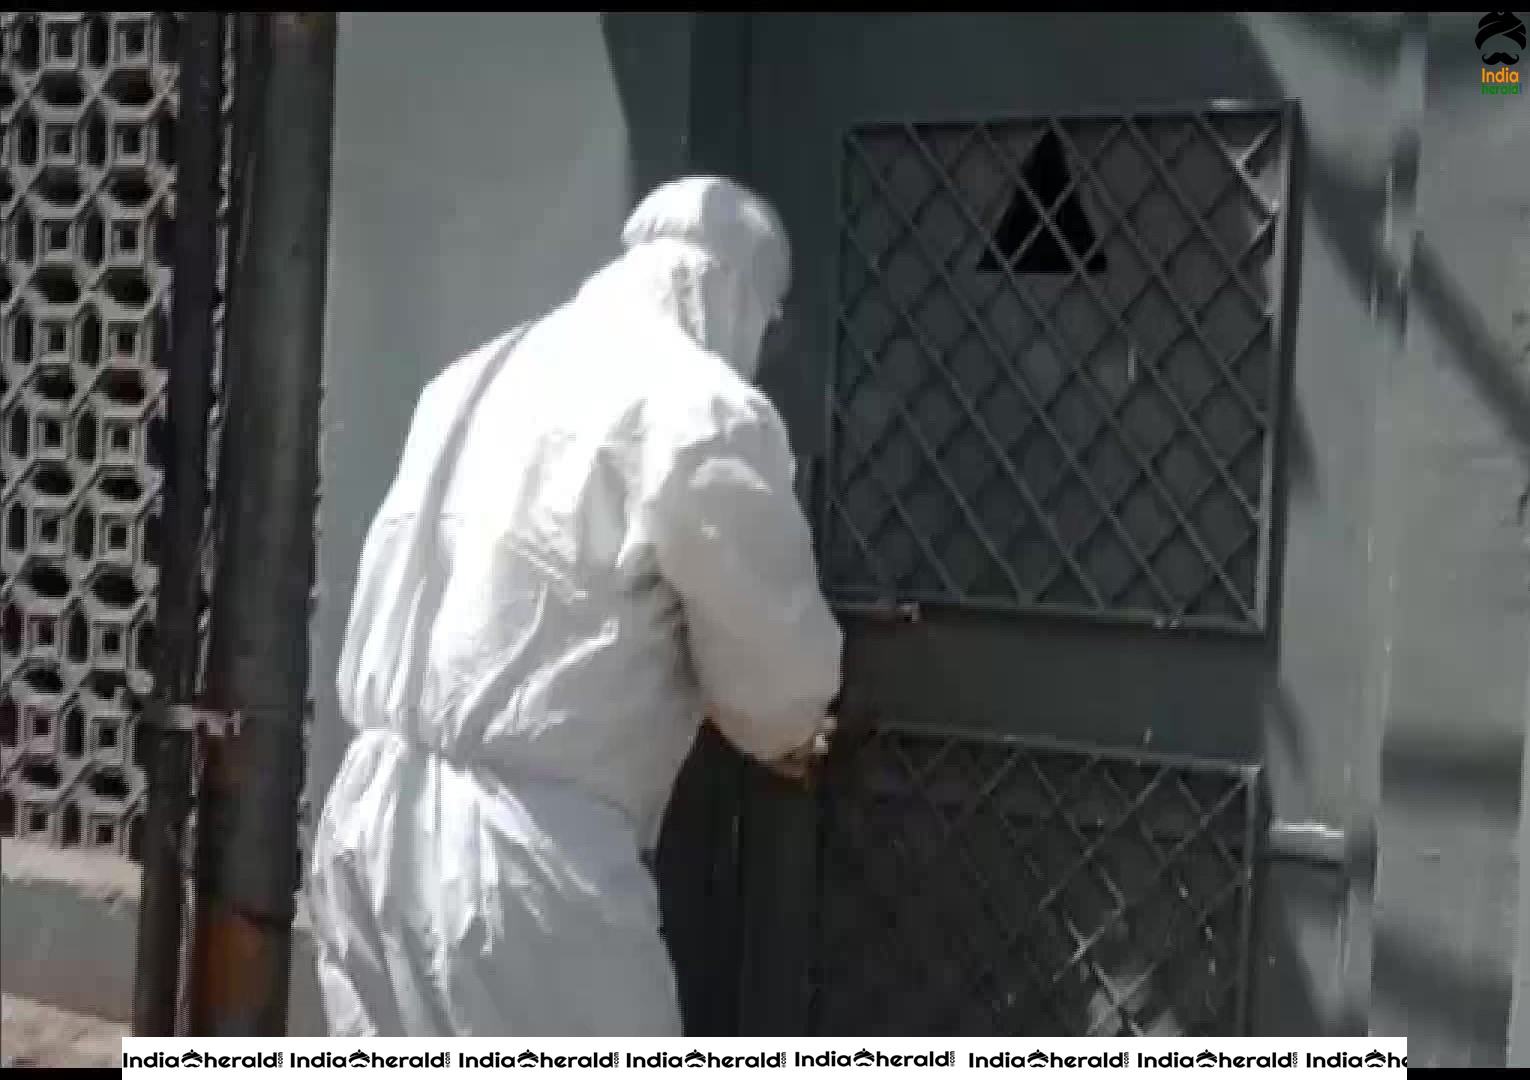 Markaz building in Nizamuddin sanitized as a religious gatherine violated Corona Virus Lockdown conditions